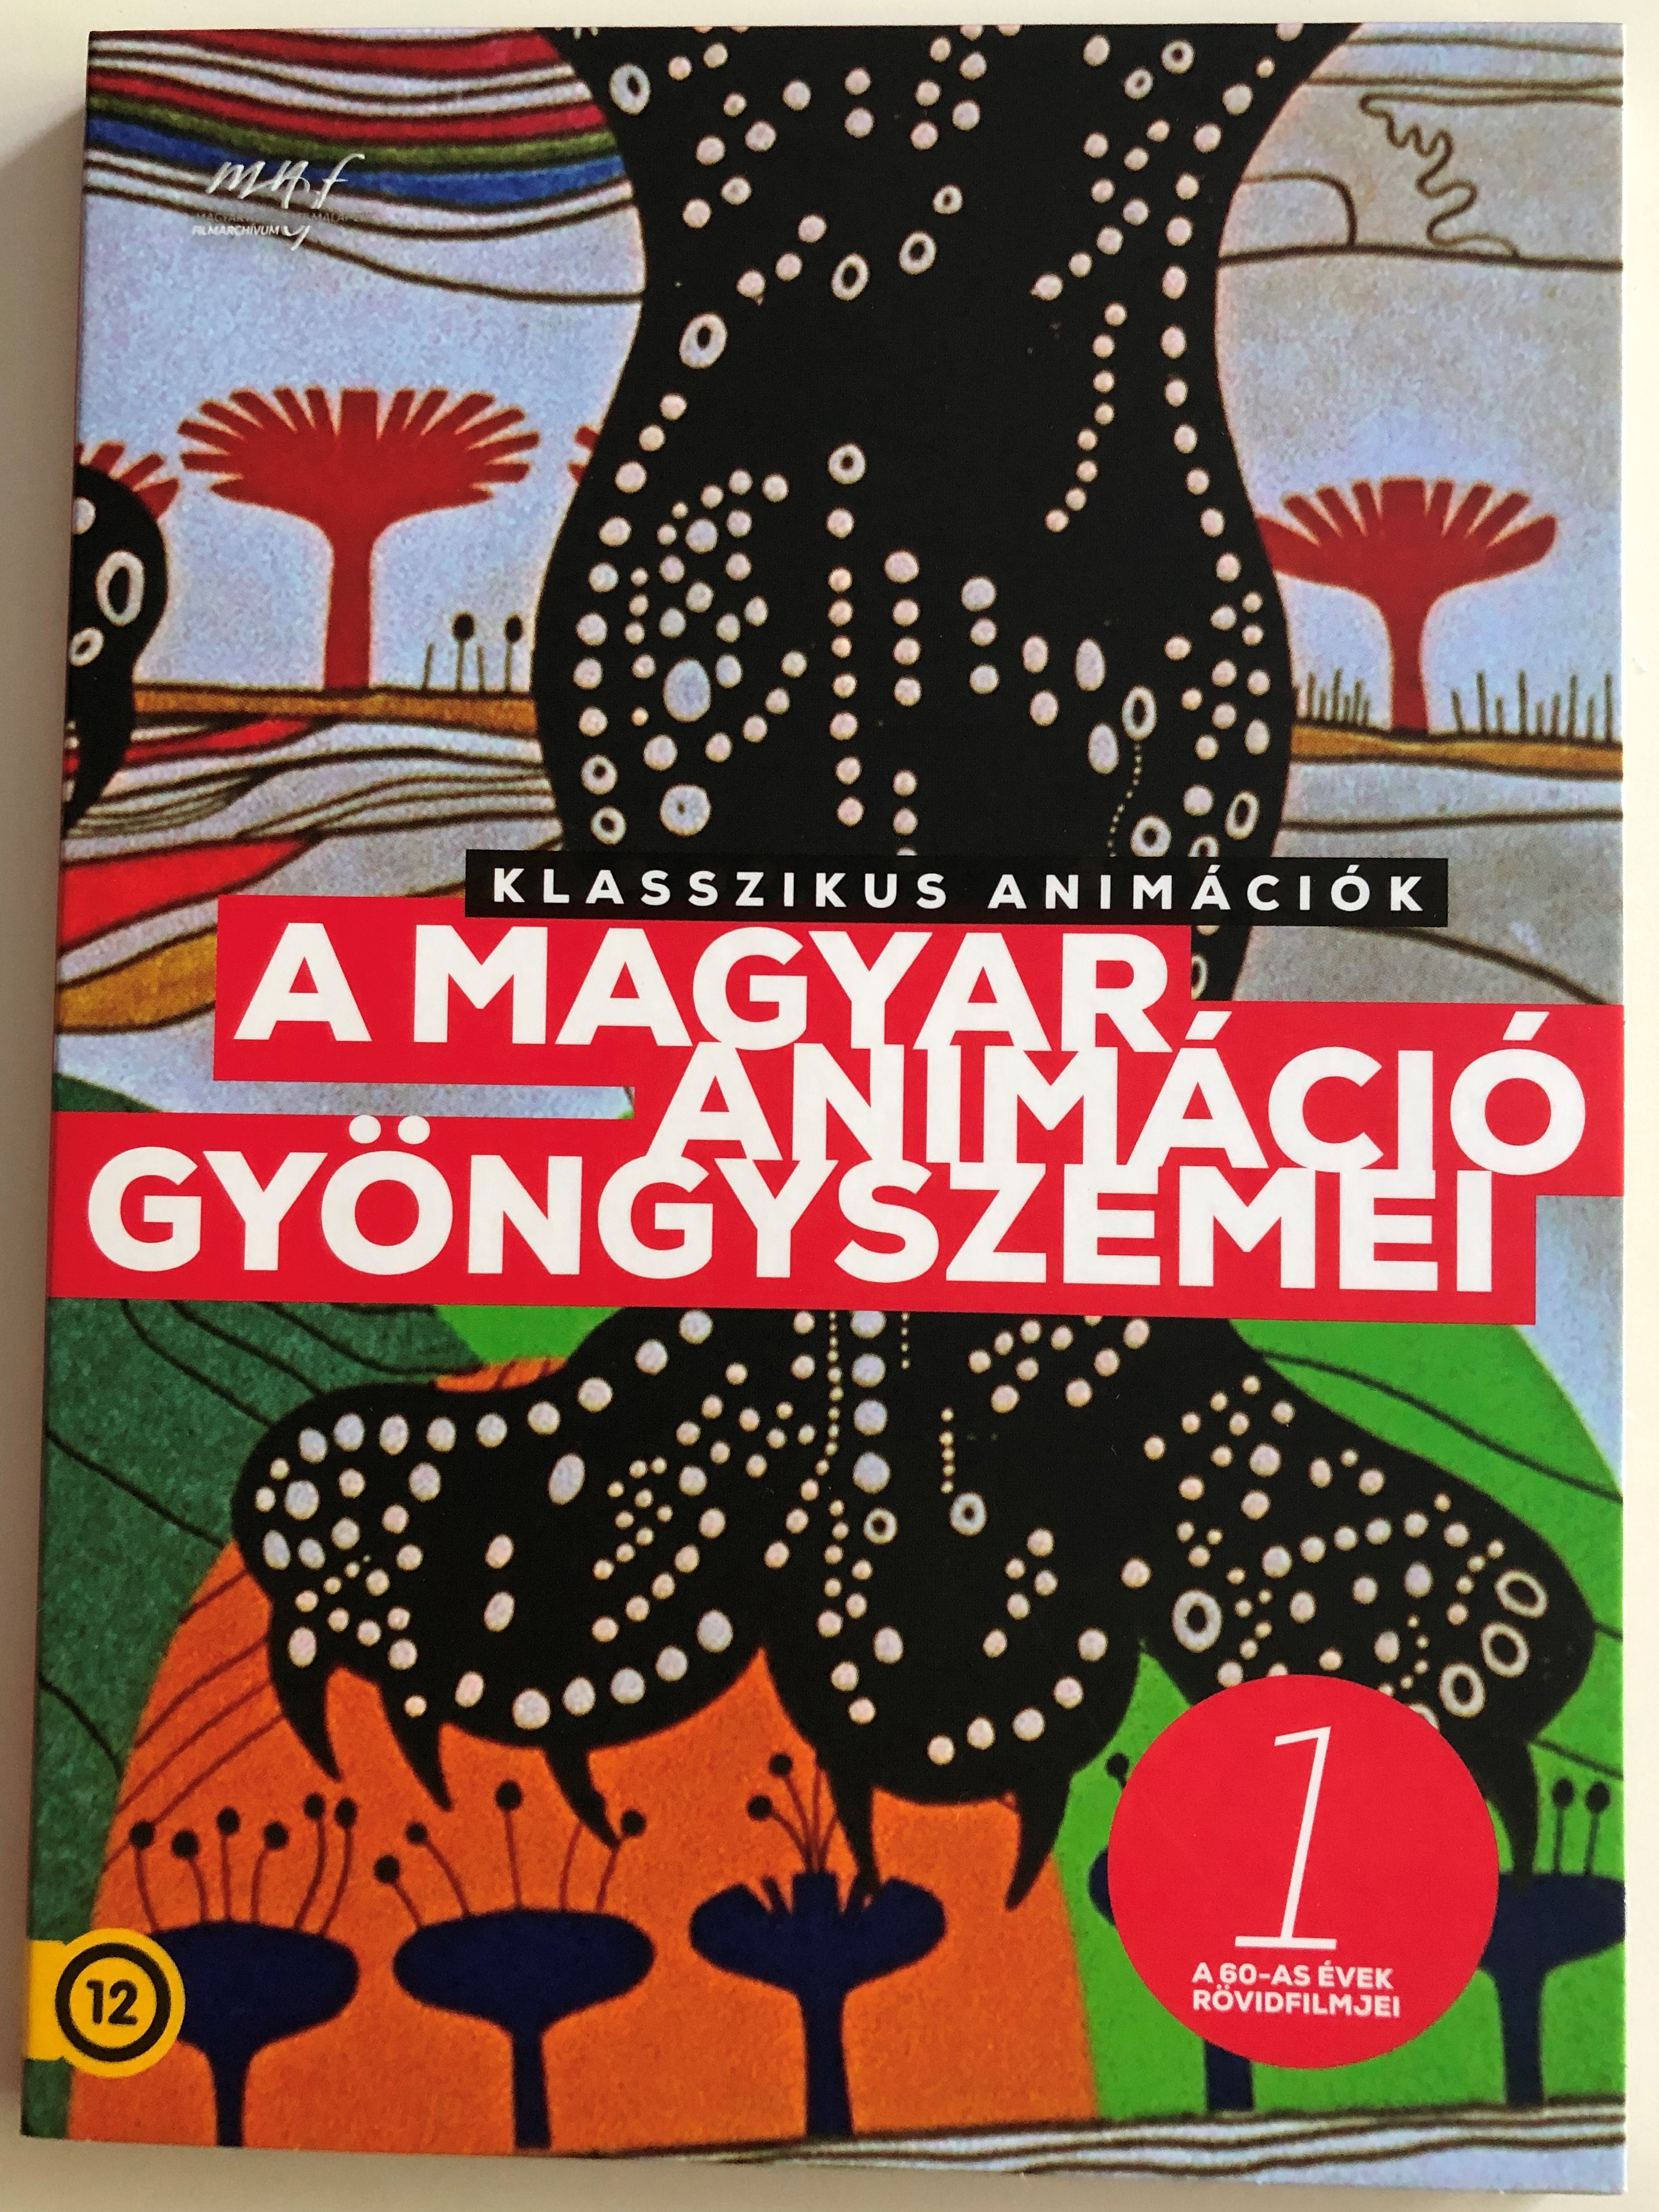 gems-of-hungarian-animation-vol-1.-dvd-2019-a-magyar-anim-ci-gy-ngyszemei-1.-a-60-as-vek-r-vidfilmjei-animated-shorts-of-the-60s-1-.jpg